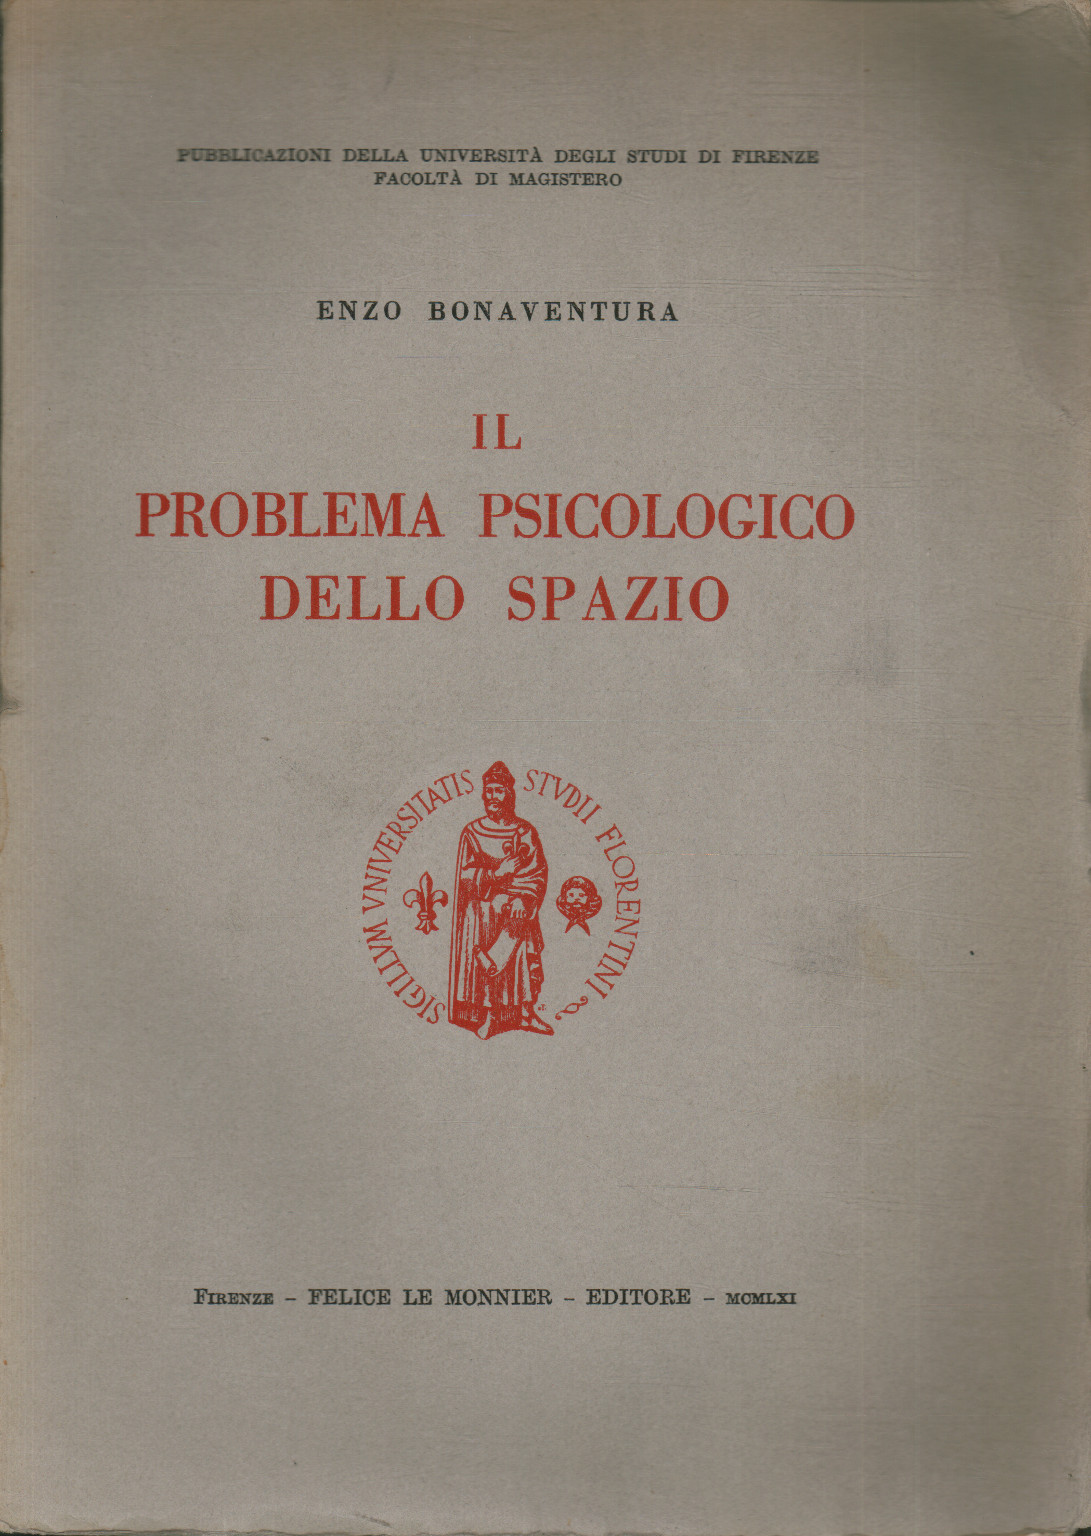 Das psychologische Raumproblem, Enzo Bonaventura